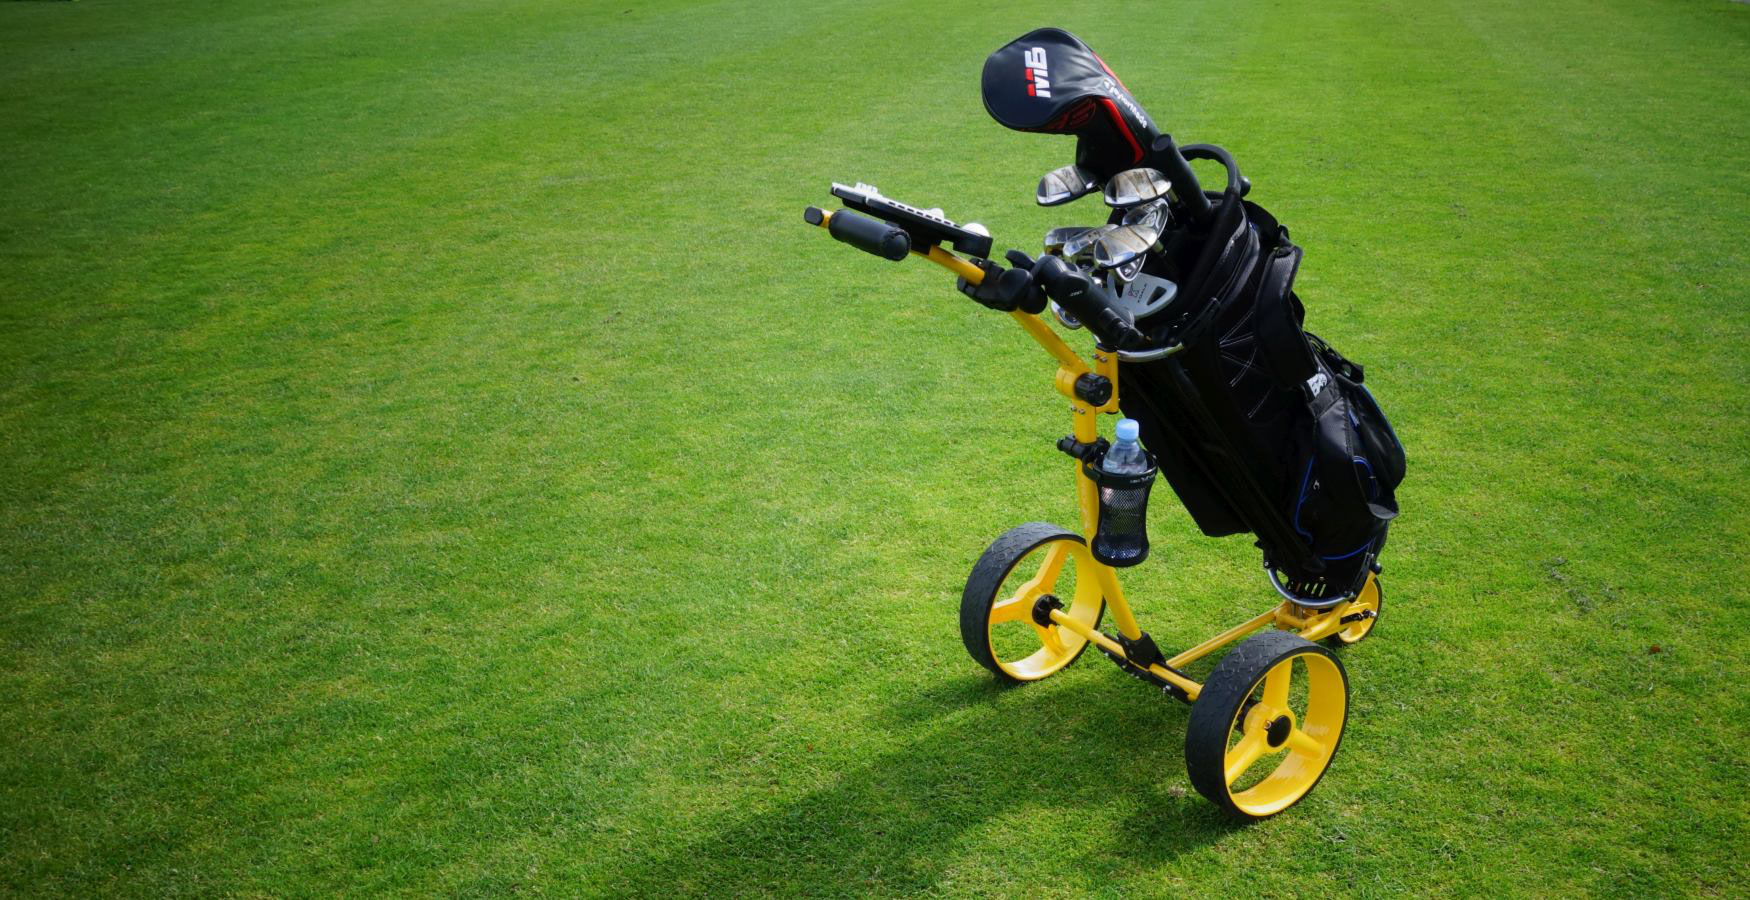 professionell golfsports gear - Yorrx®